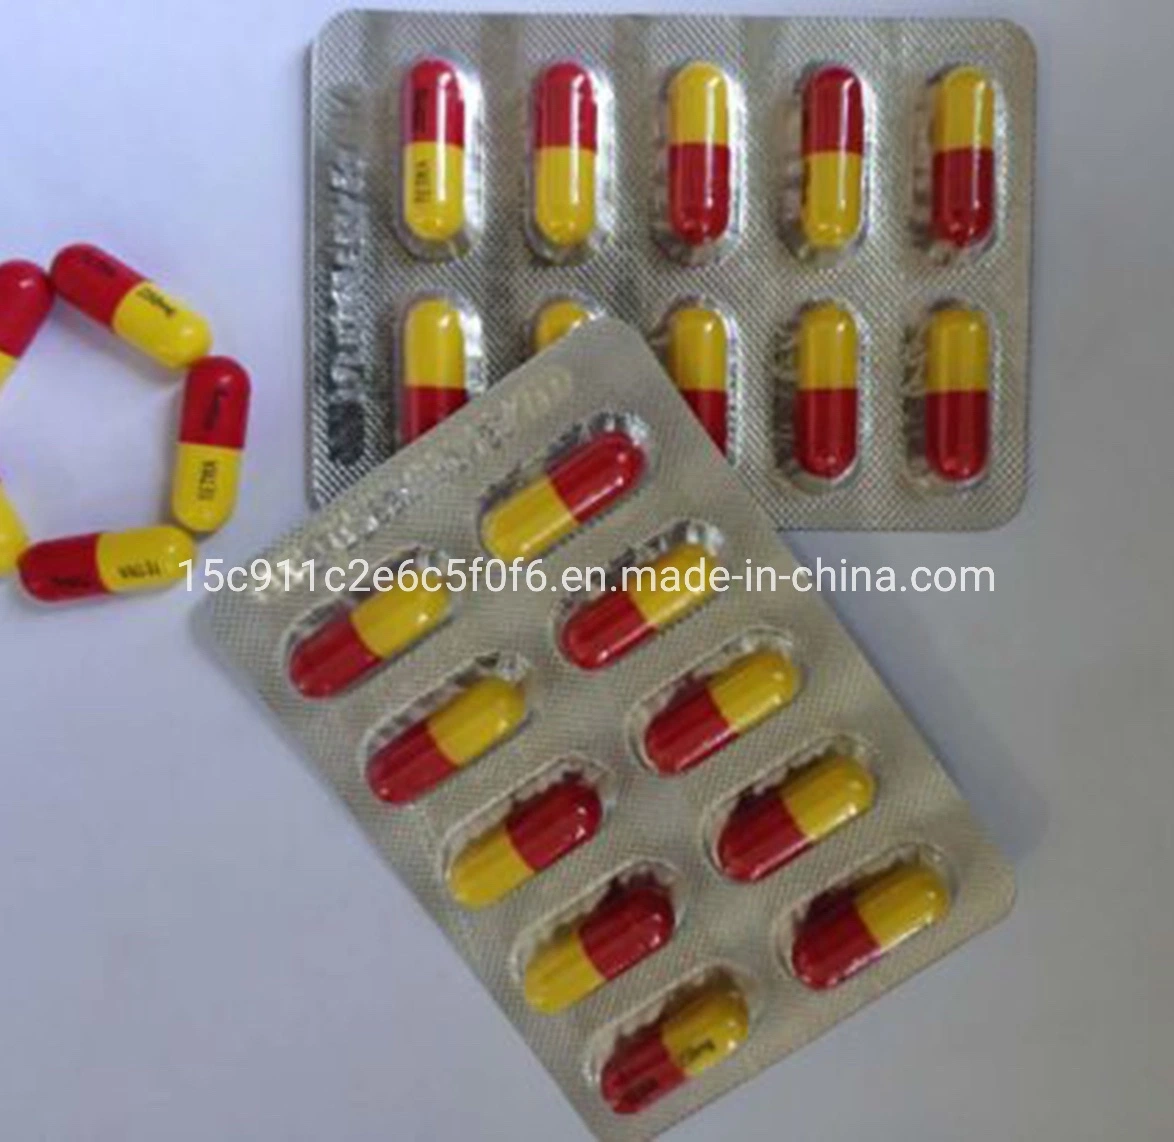 Tetracycline HCl Capsule 250mg